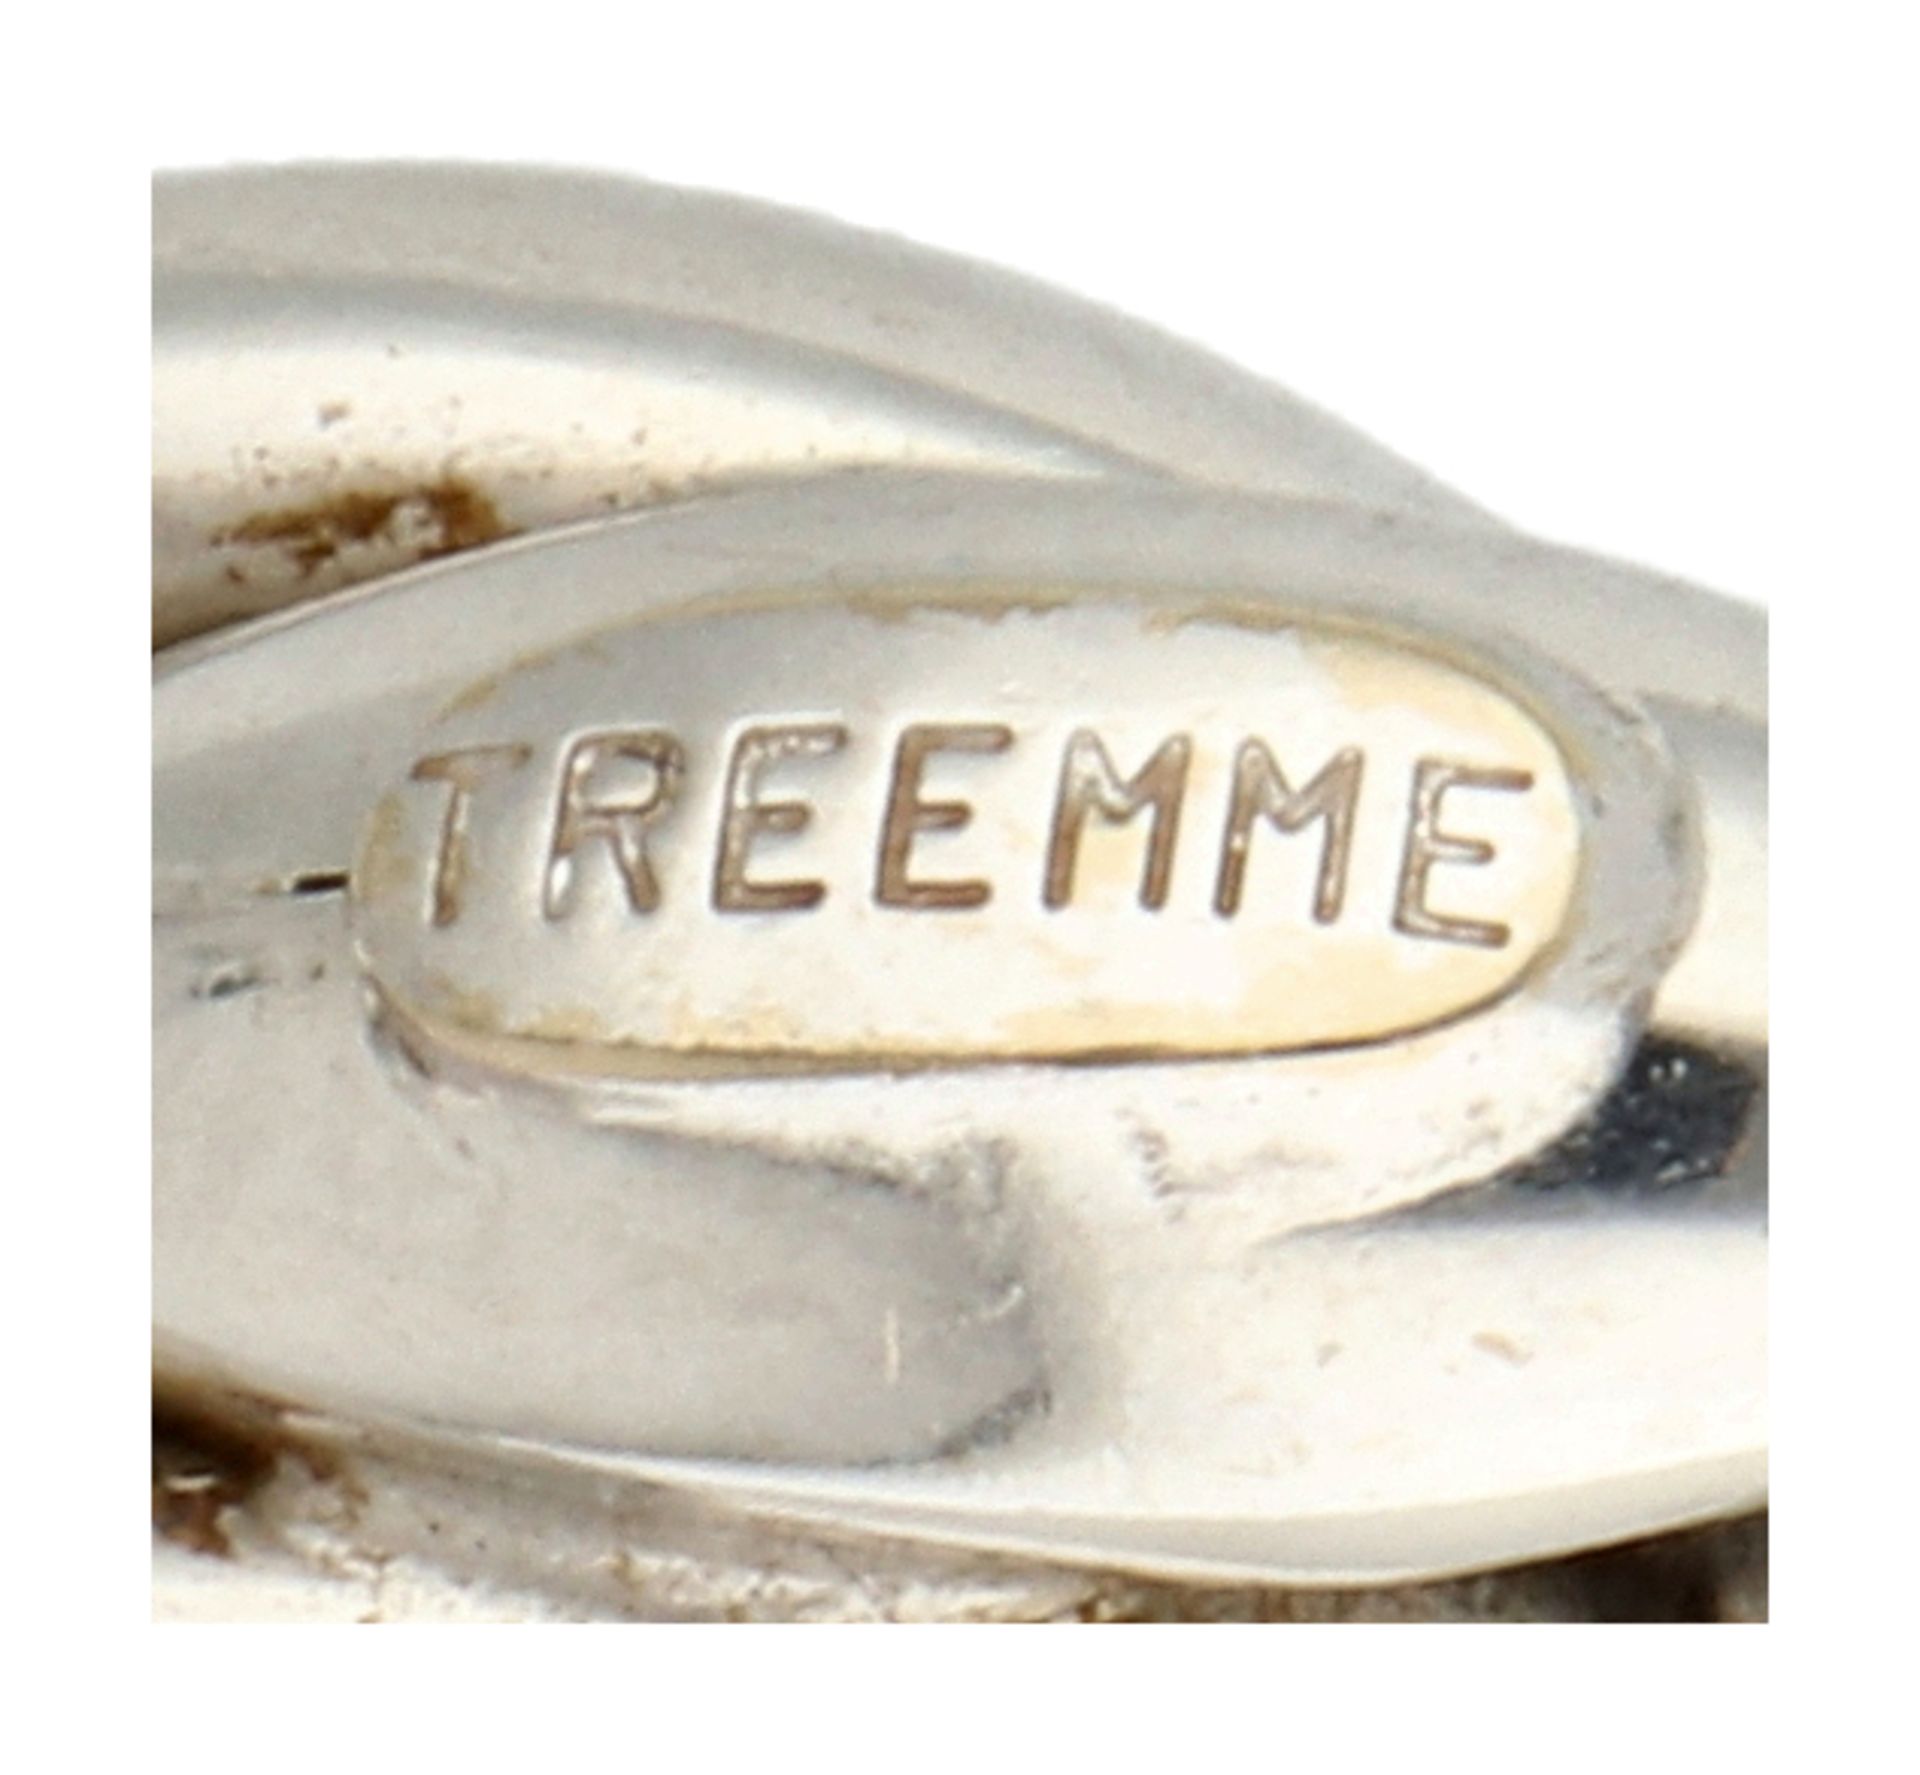 Treemme 18K white gold necklace. - Image 4 of 4